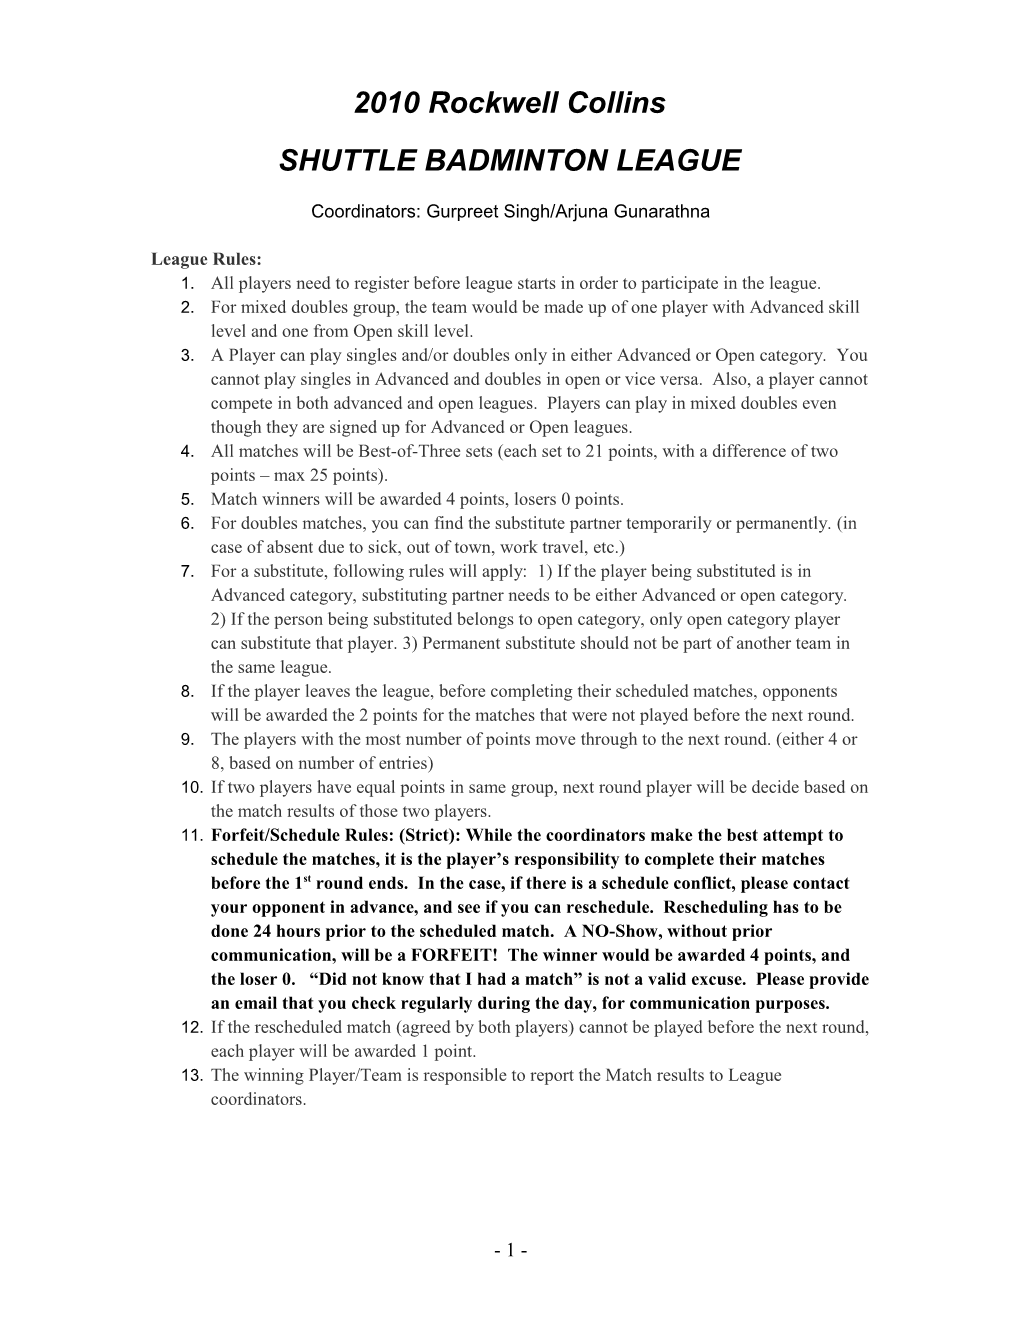 Rules of Badminton